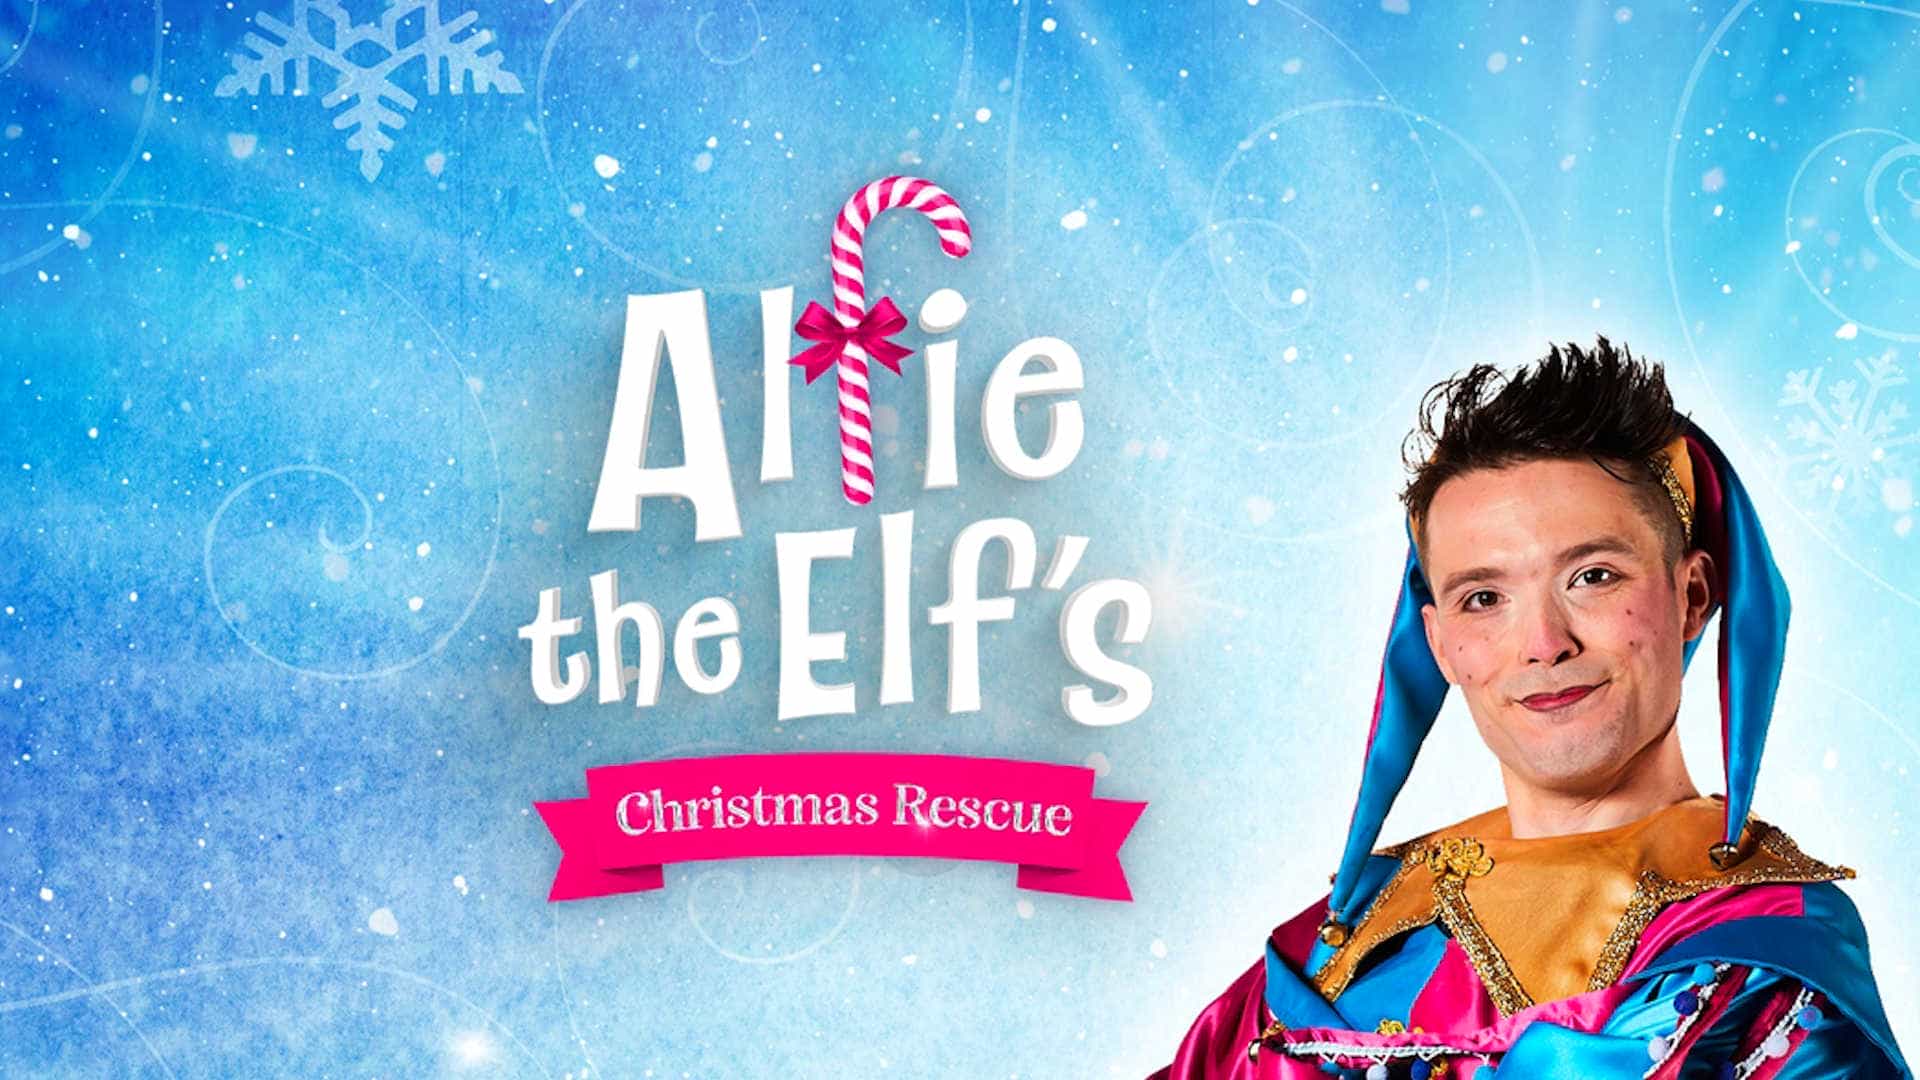 Alfie The Elf's Christmas Rescue